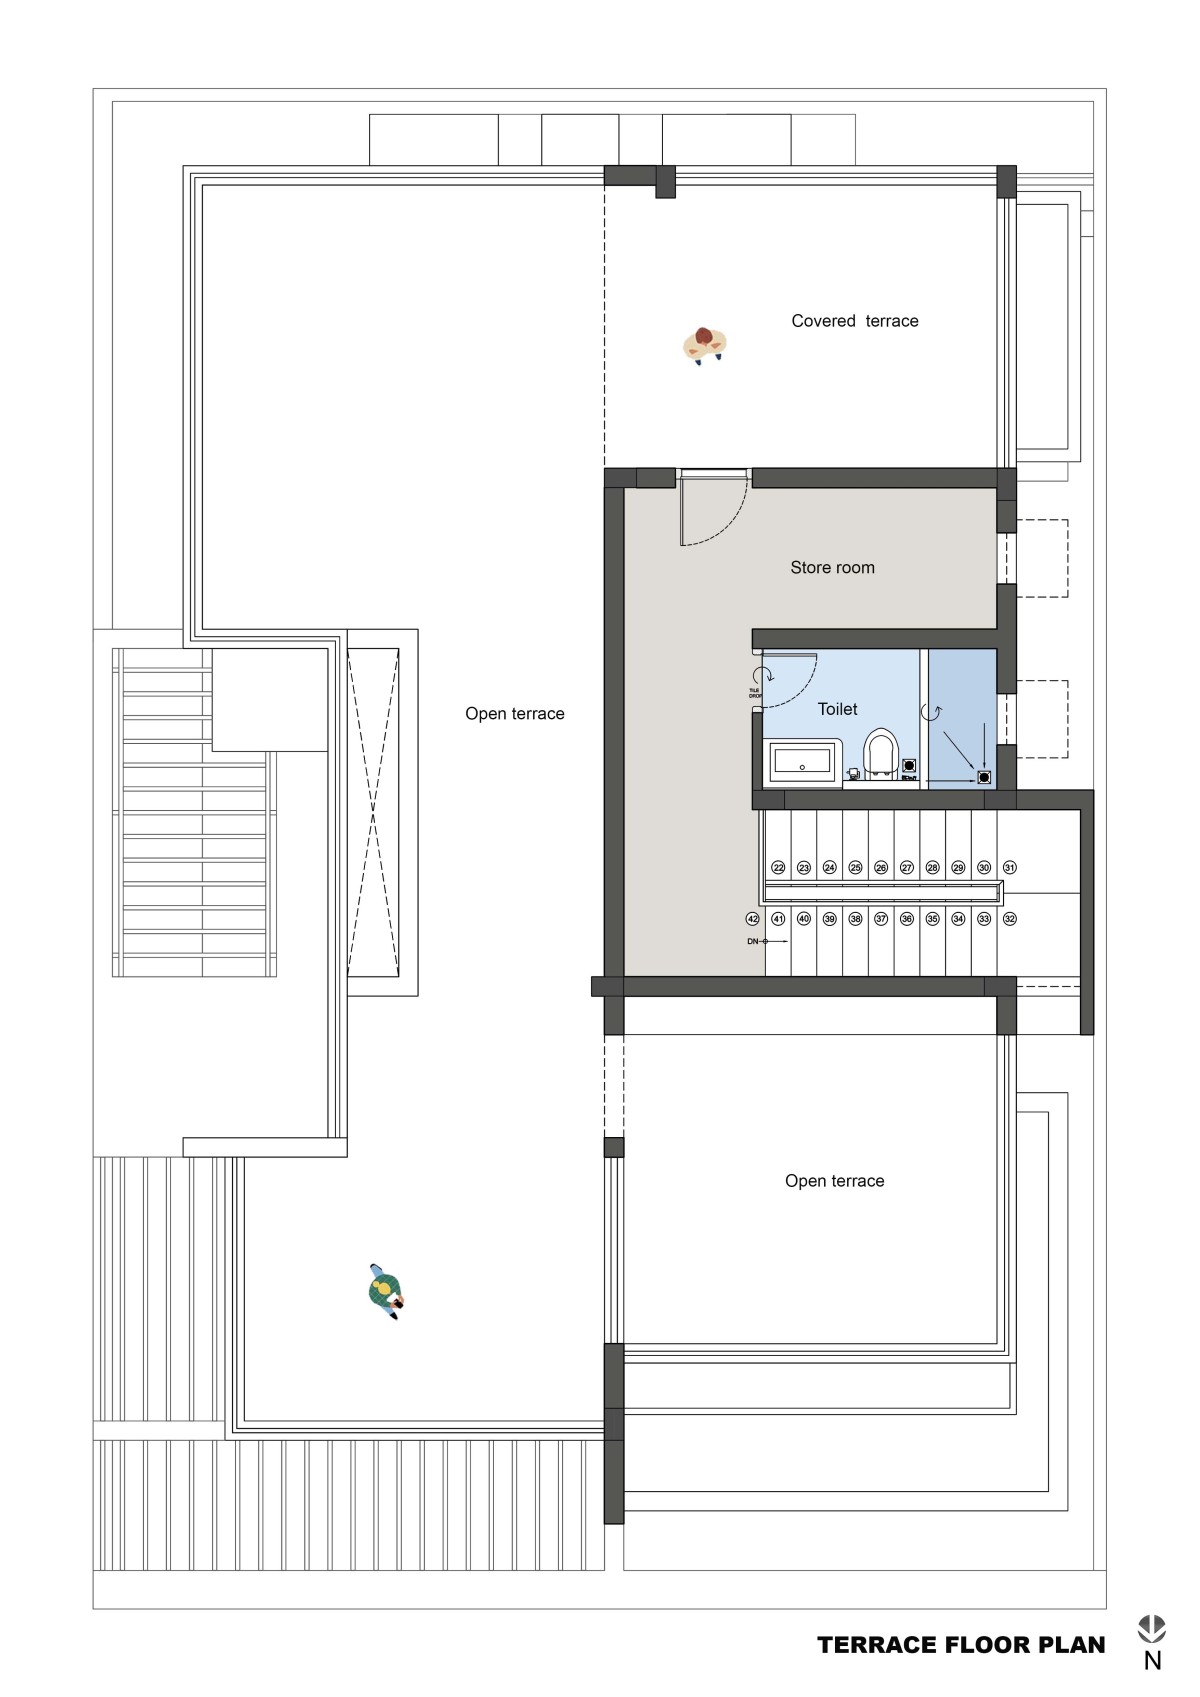 Terrace floor plan of Falak Residence by Space